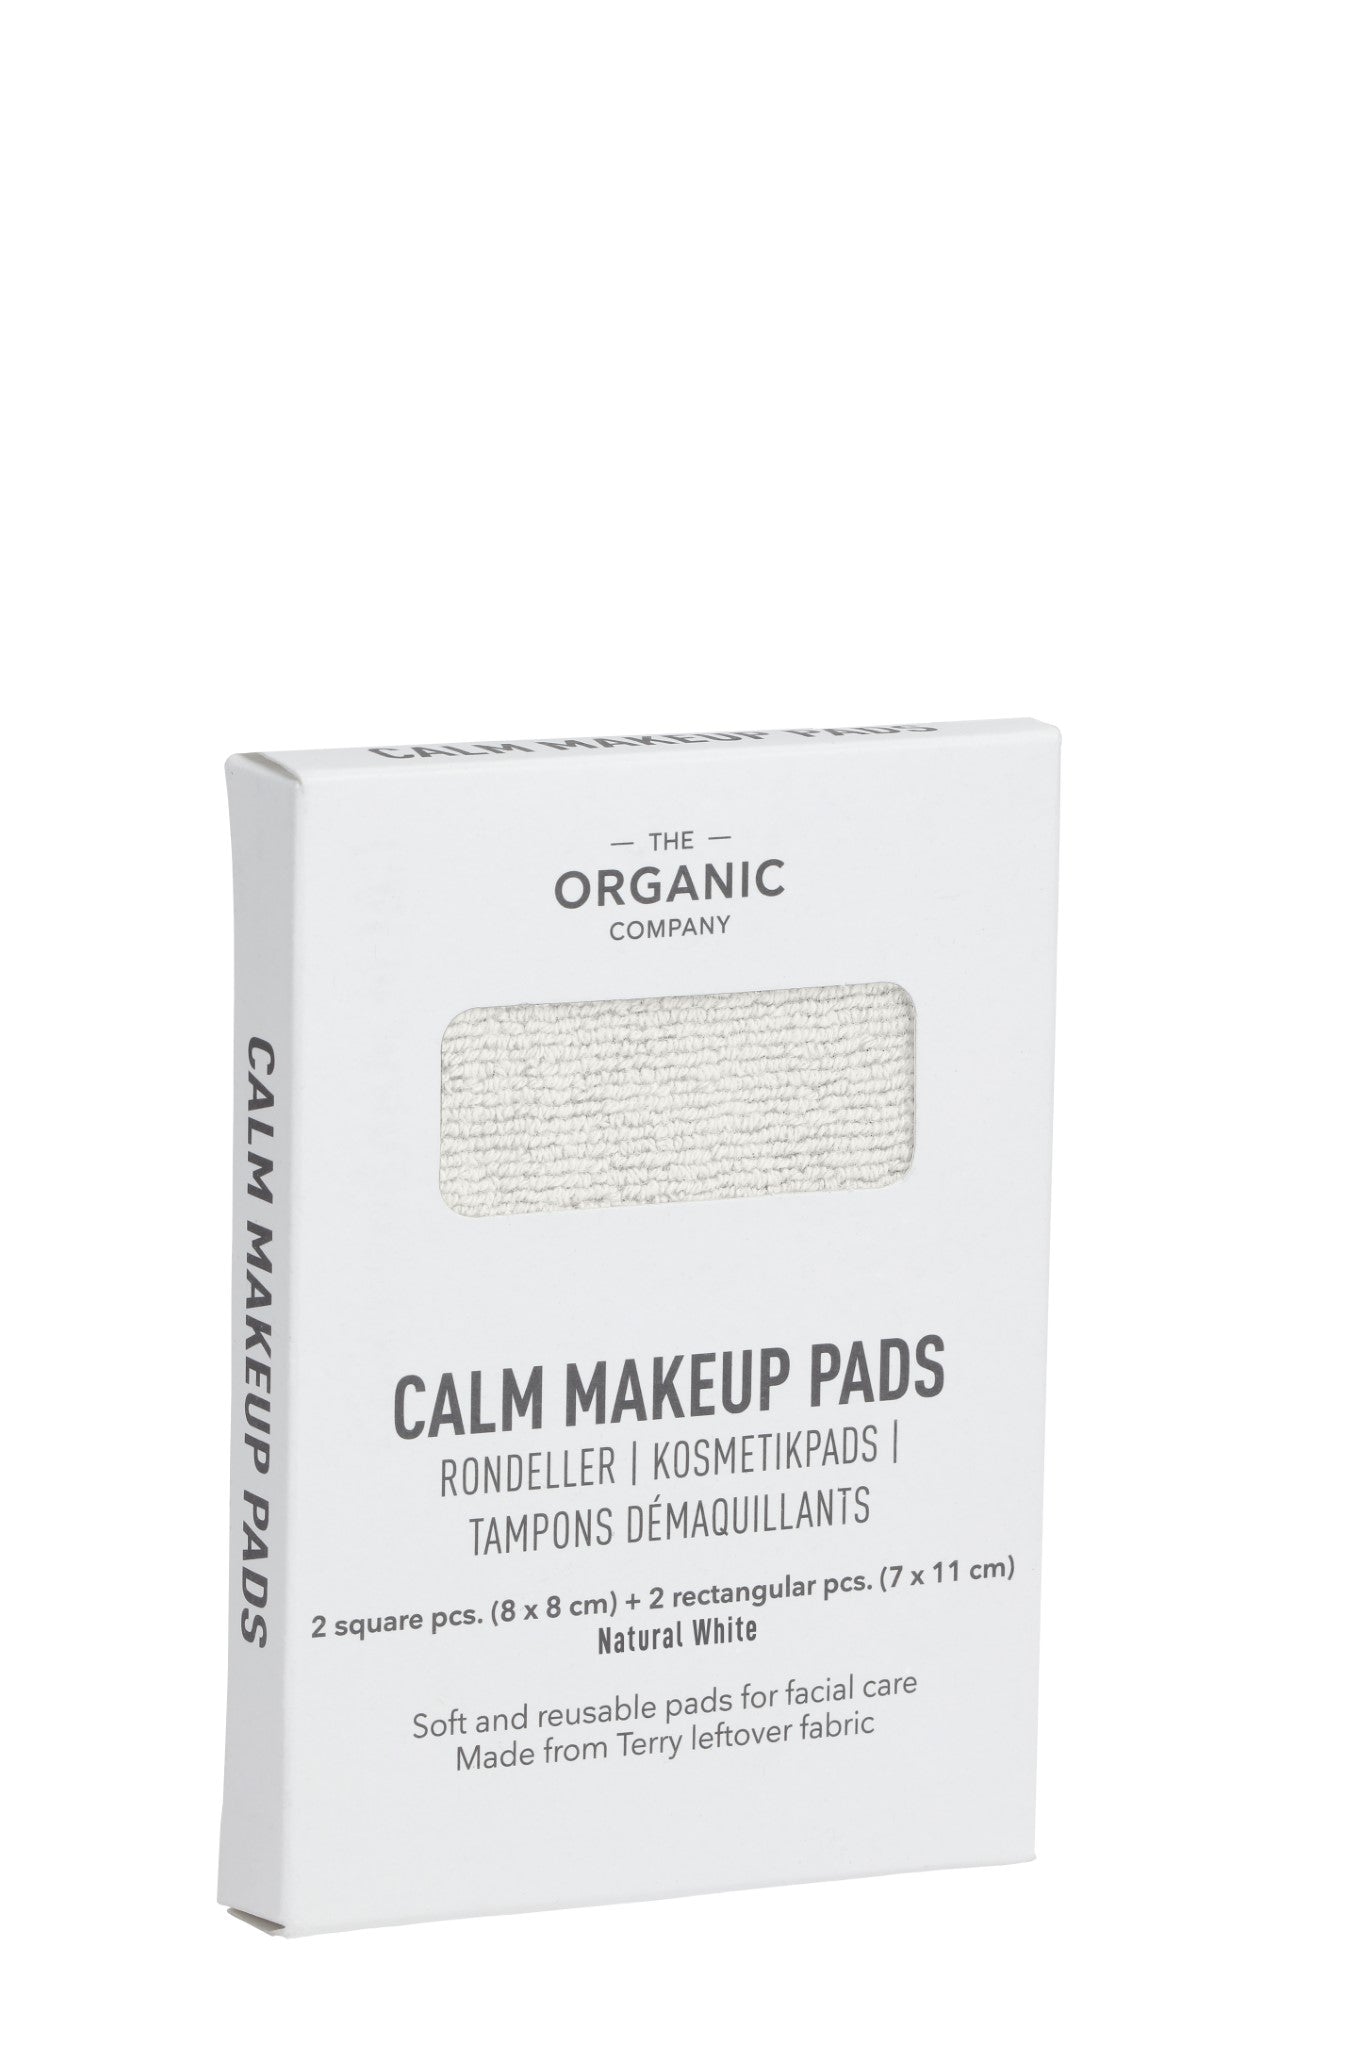 Calm Makeup Pads - Natural White